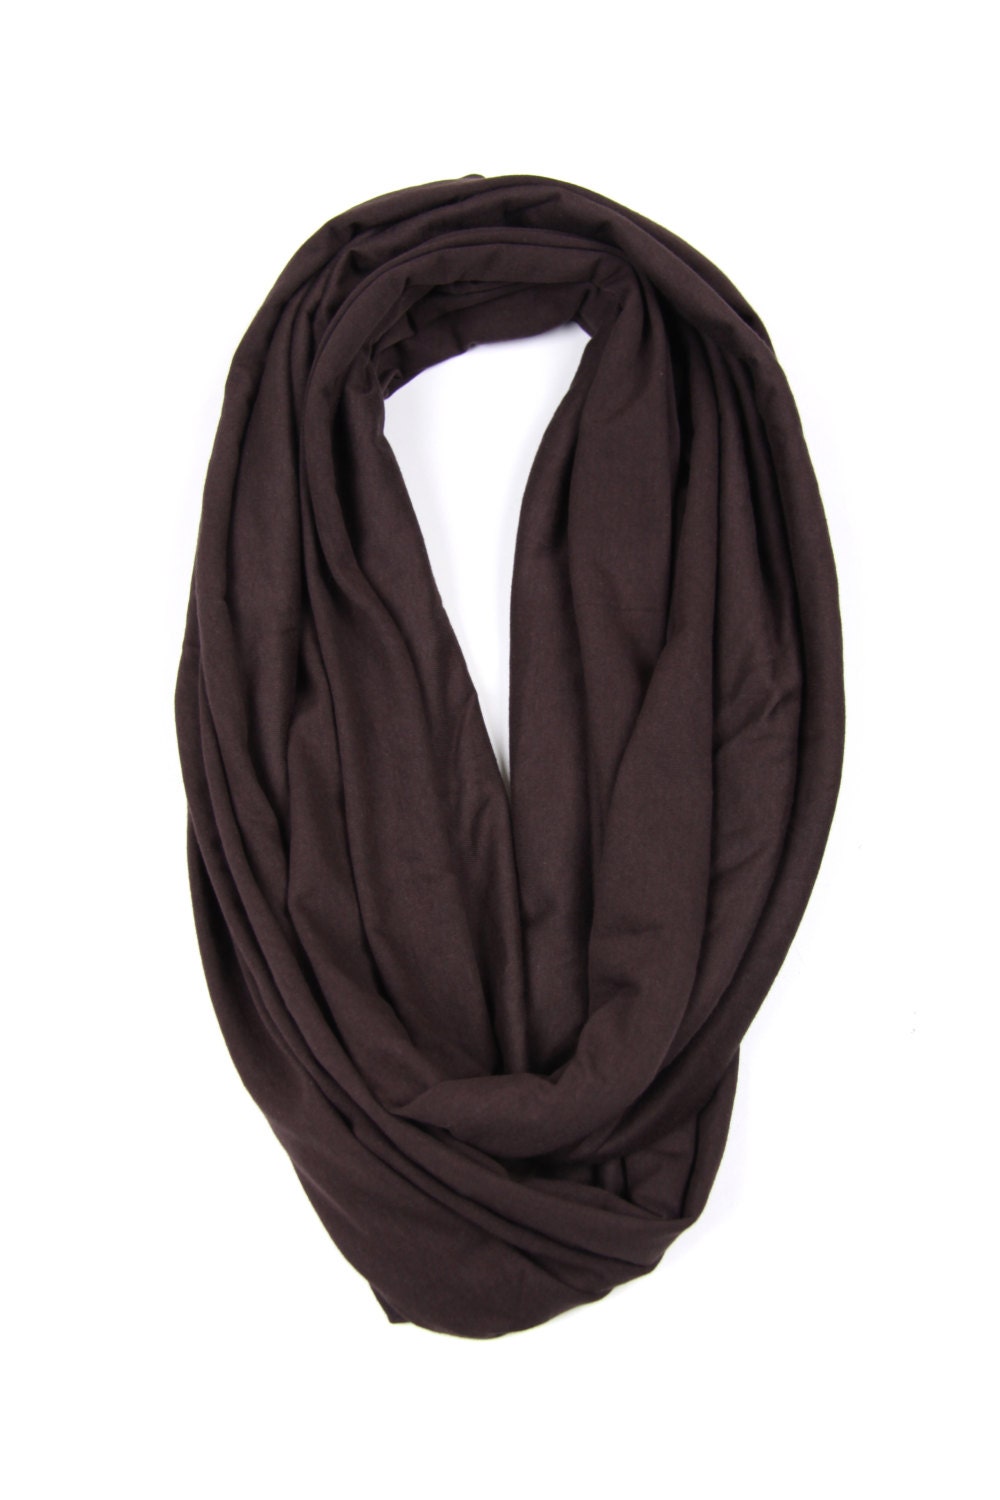 Warm handmade grey scarf soft infinity scarf cotton jersey | Etsy